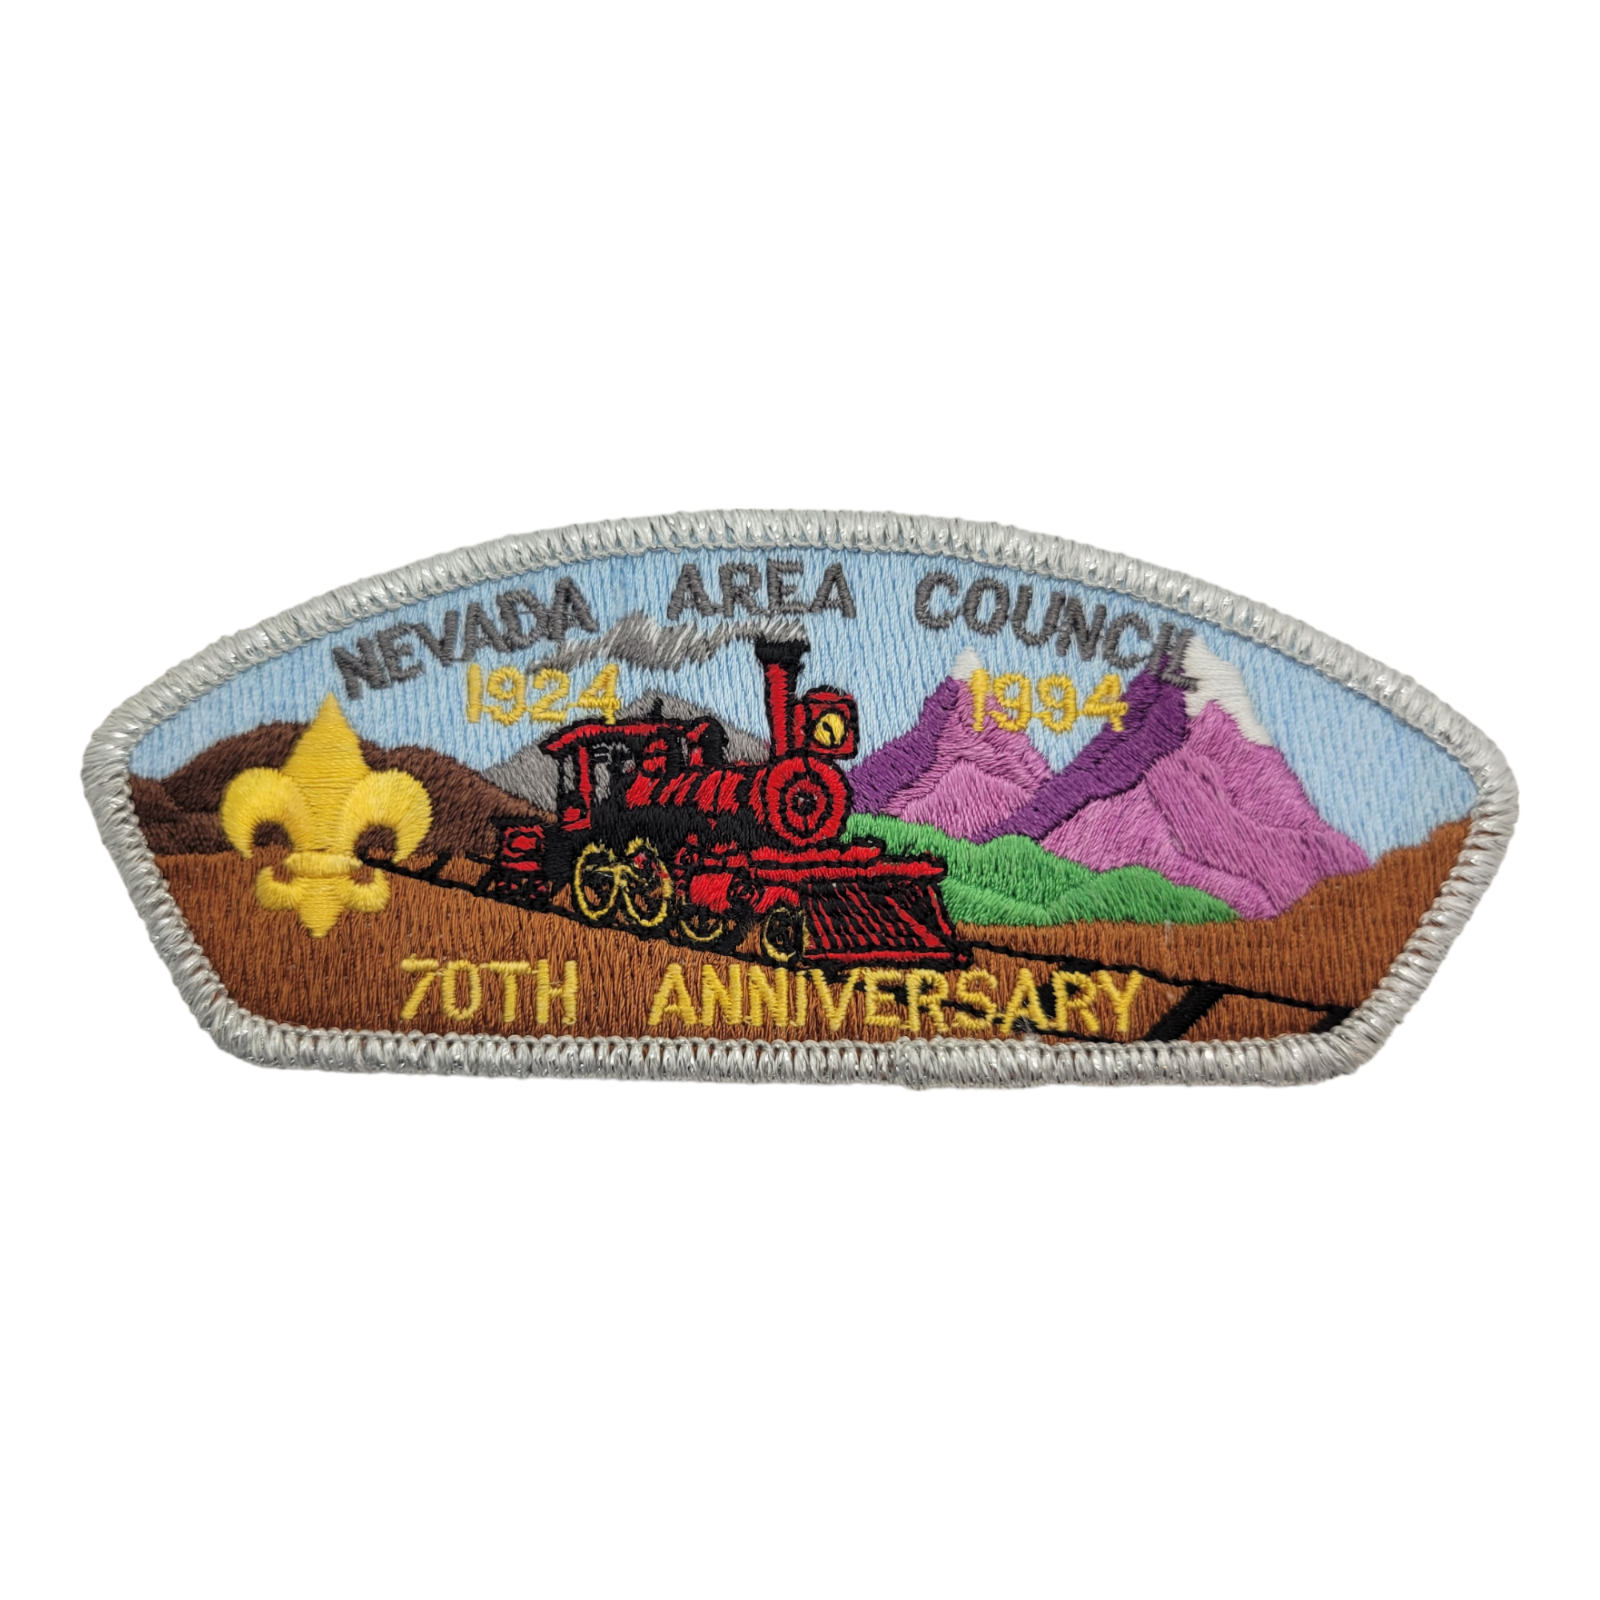 Nevada Area Council 1924-1994 70th Anniversary CSP Train Boy Scout BSA Patch